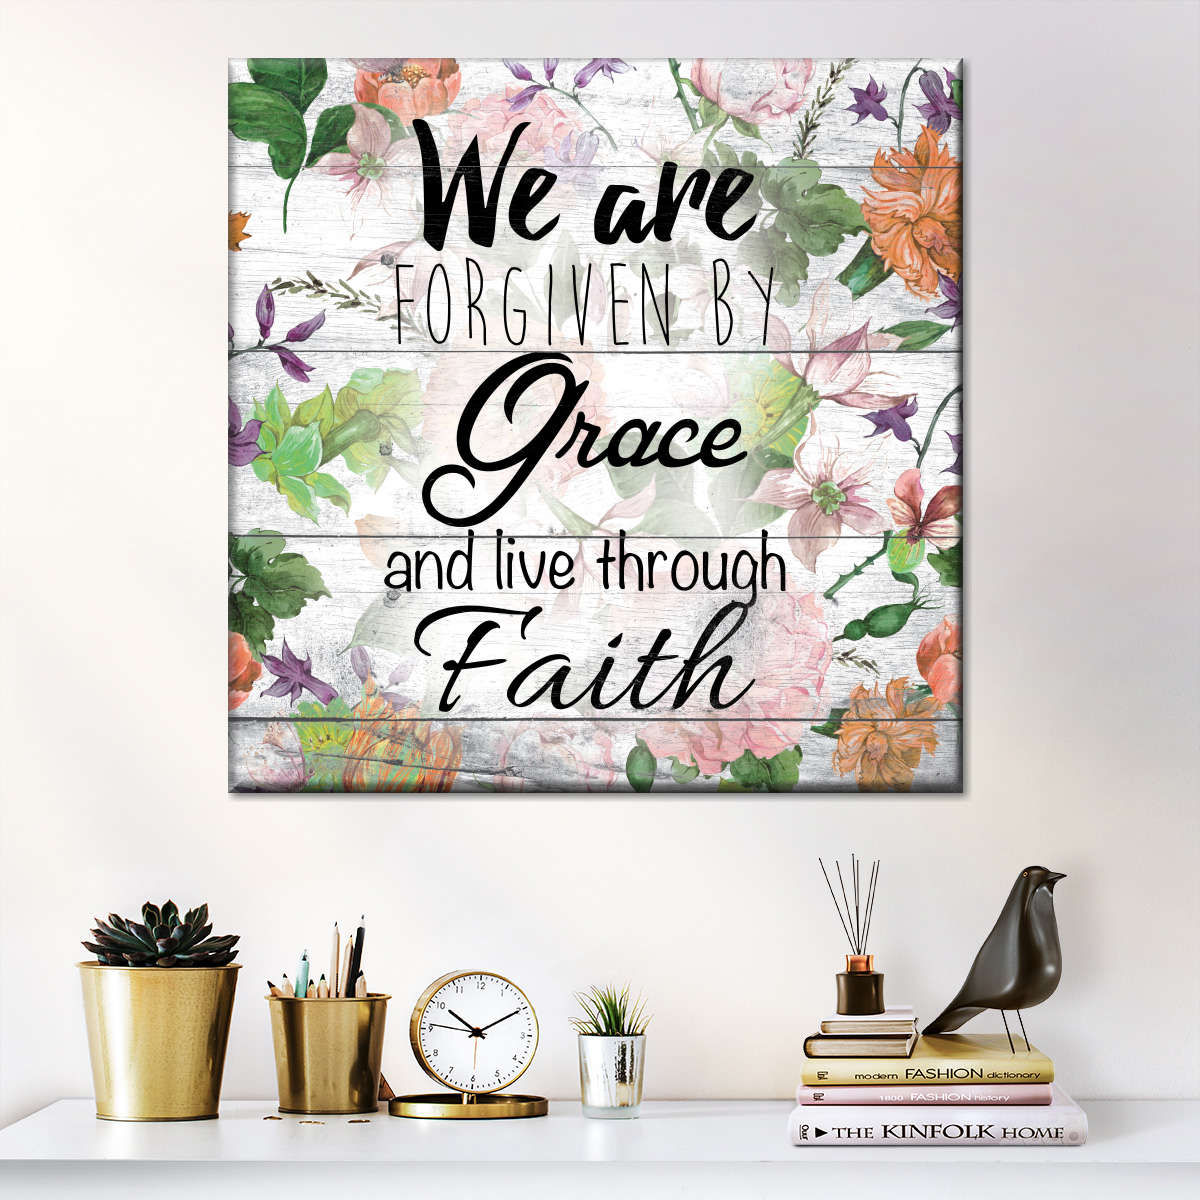 Grace And Faith I Square Canvas Wall Art - Christian Wall Decor - Christian Wall Hanging